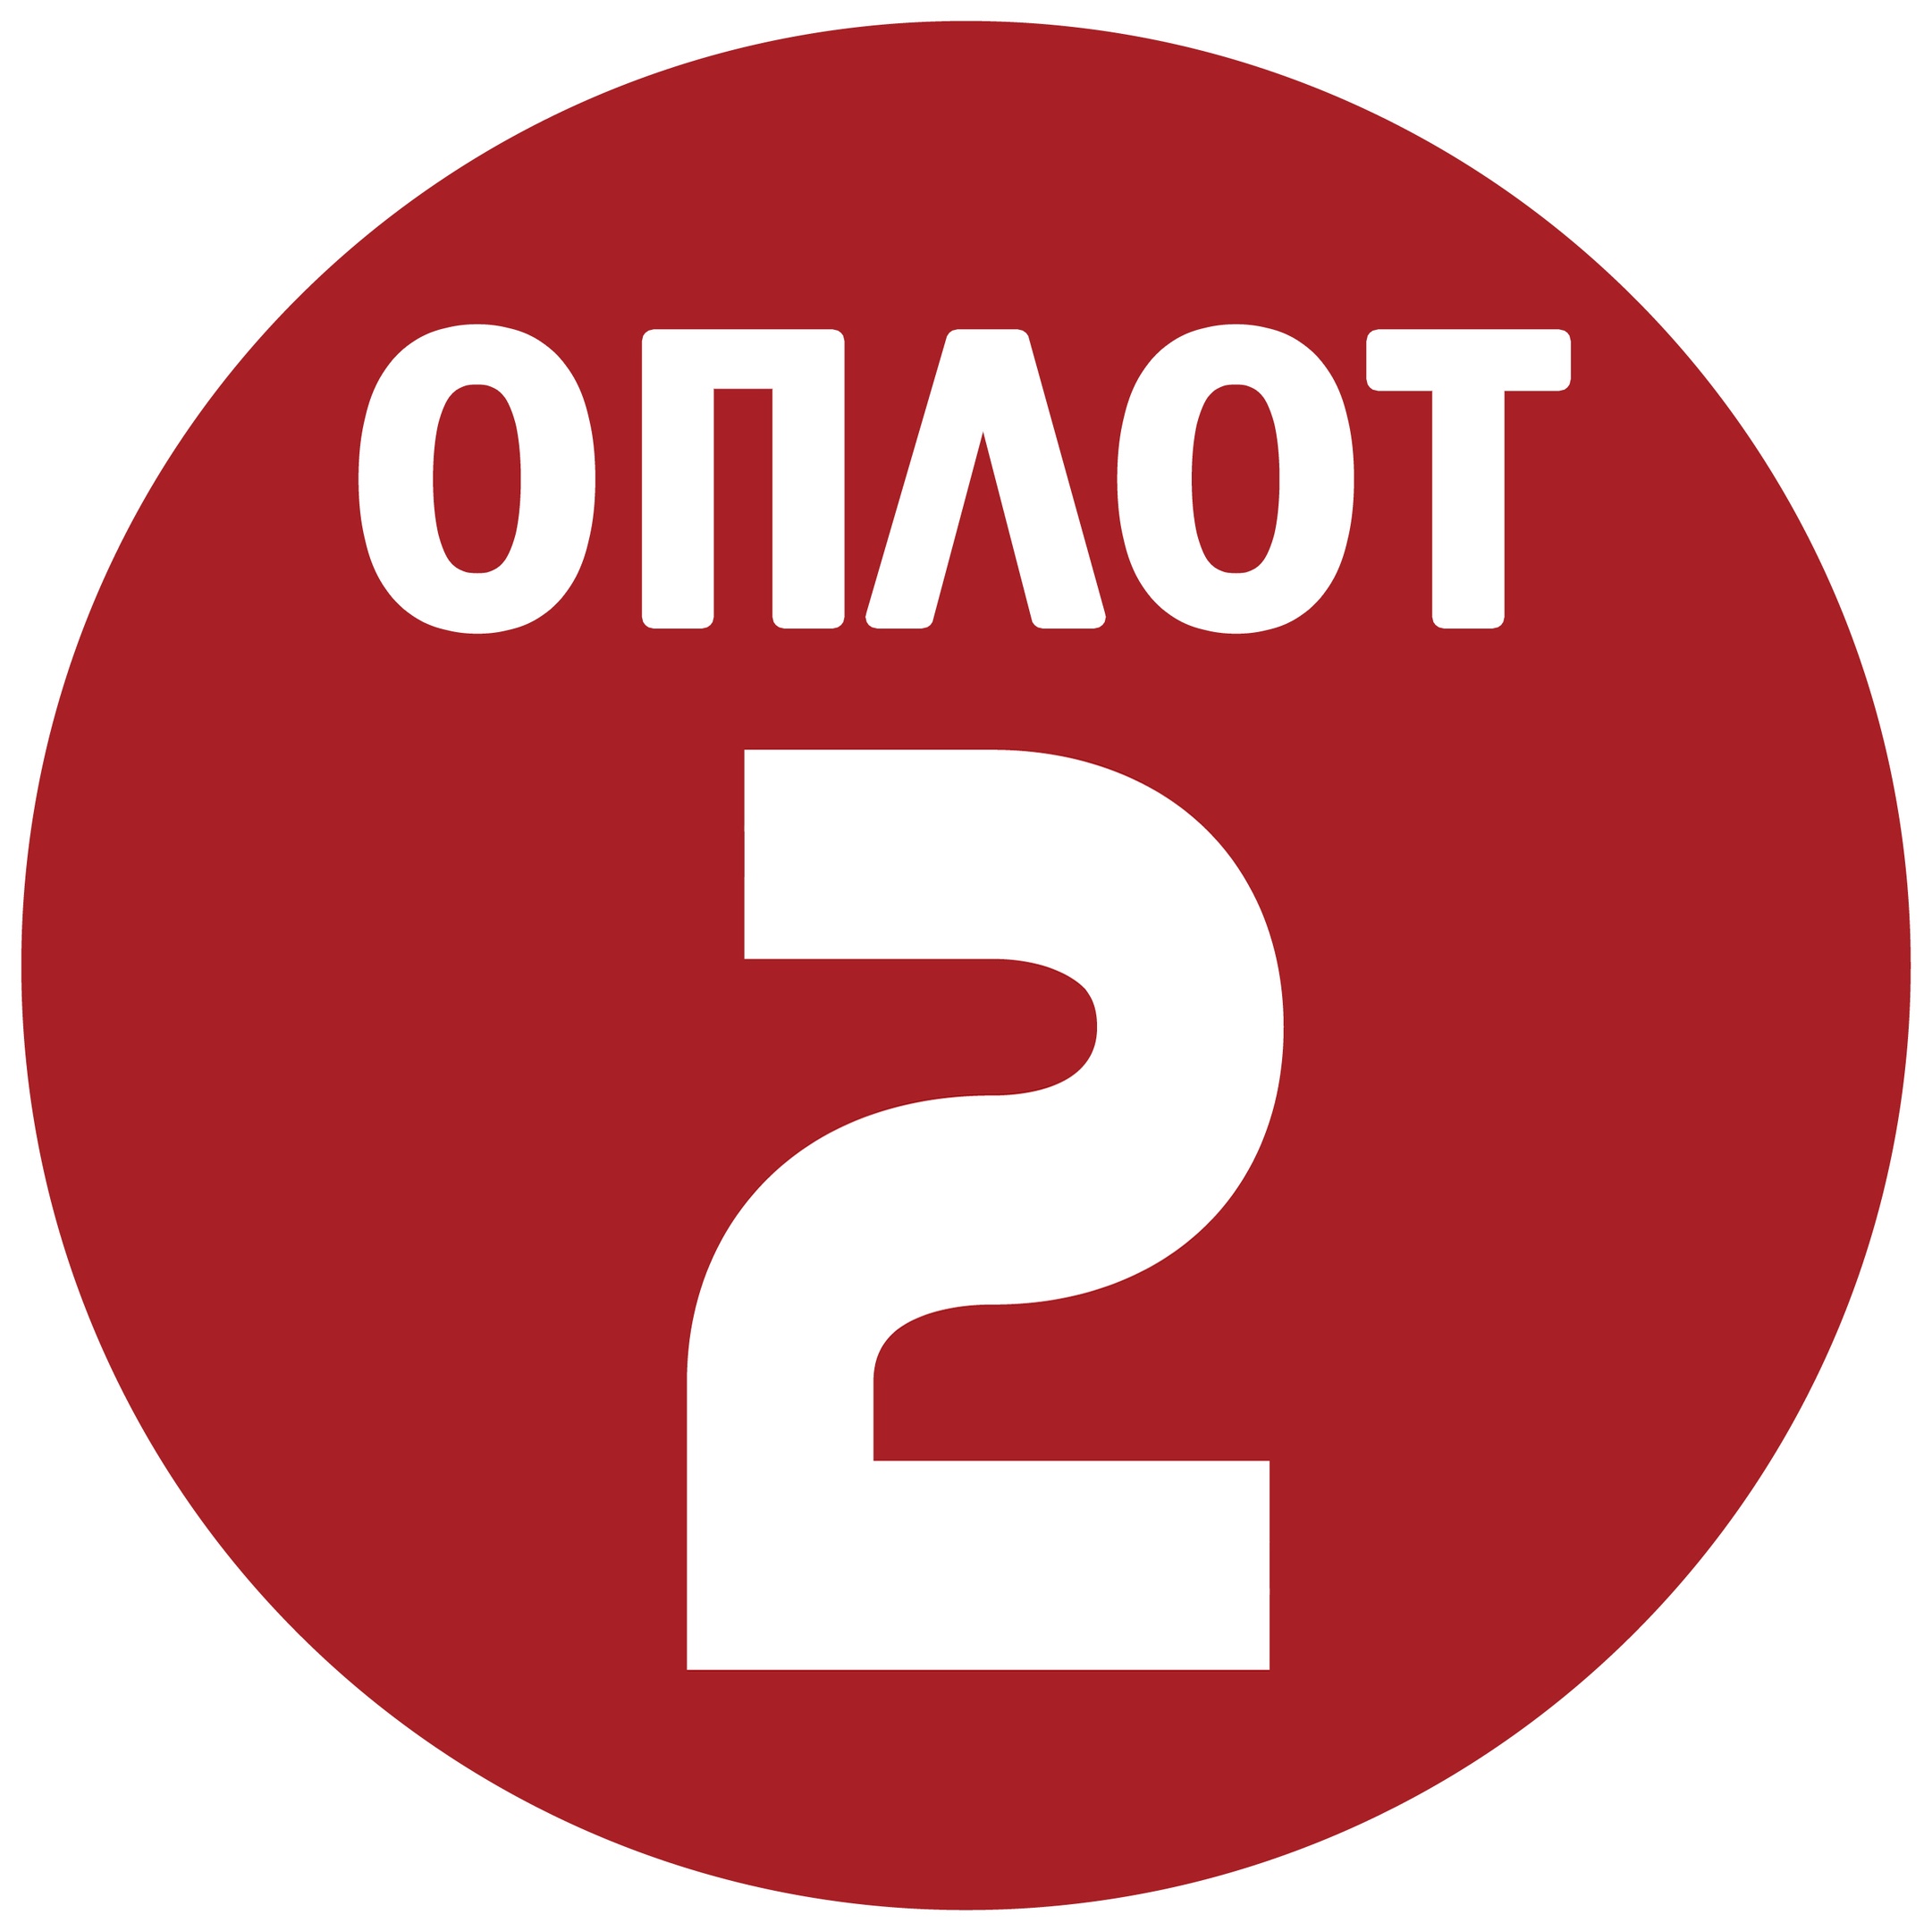 Программа на оплот 2. Телеканал Оплот. Логотип канала Оплот 2. Оплот 2 ТВ. Оплот 2 ТВ программа.